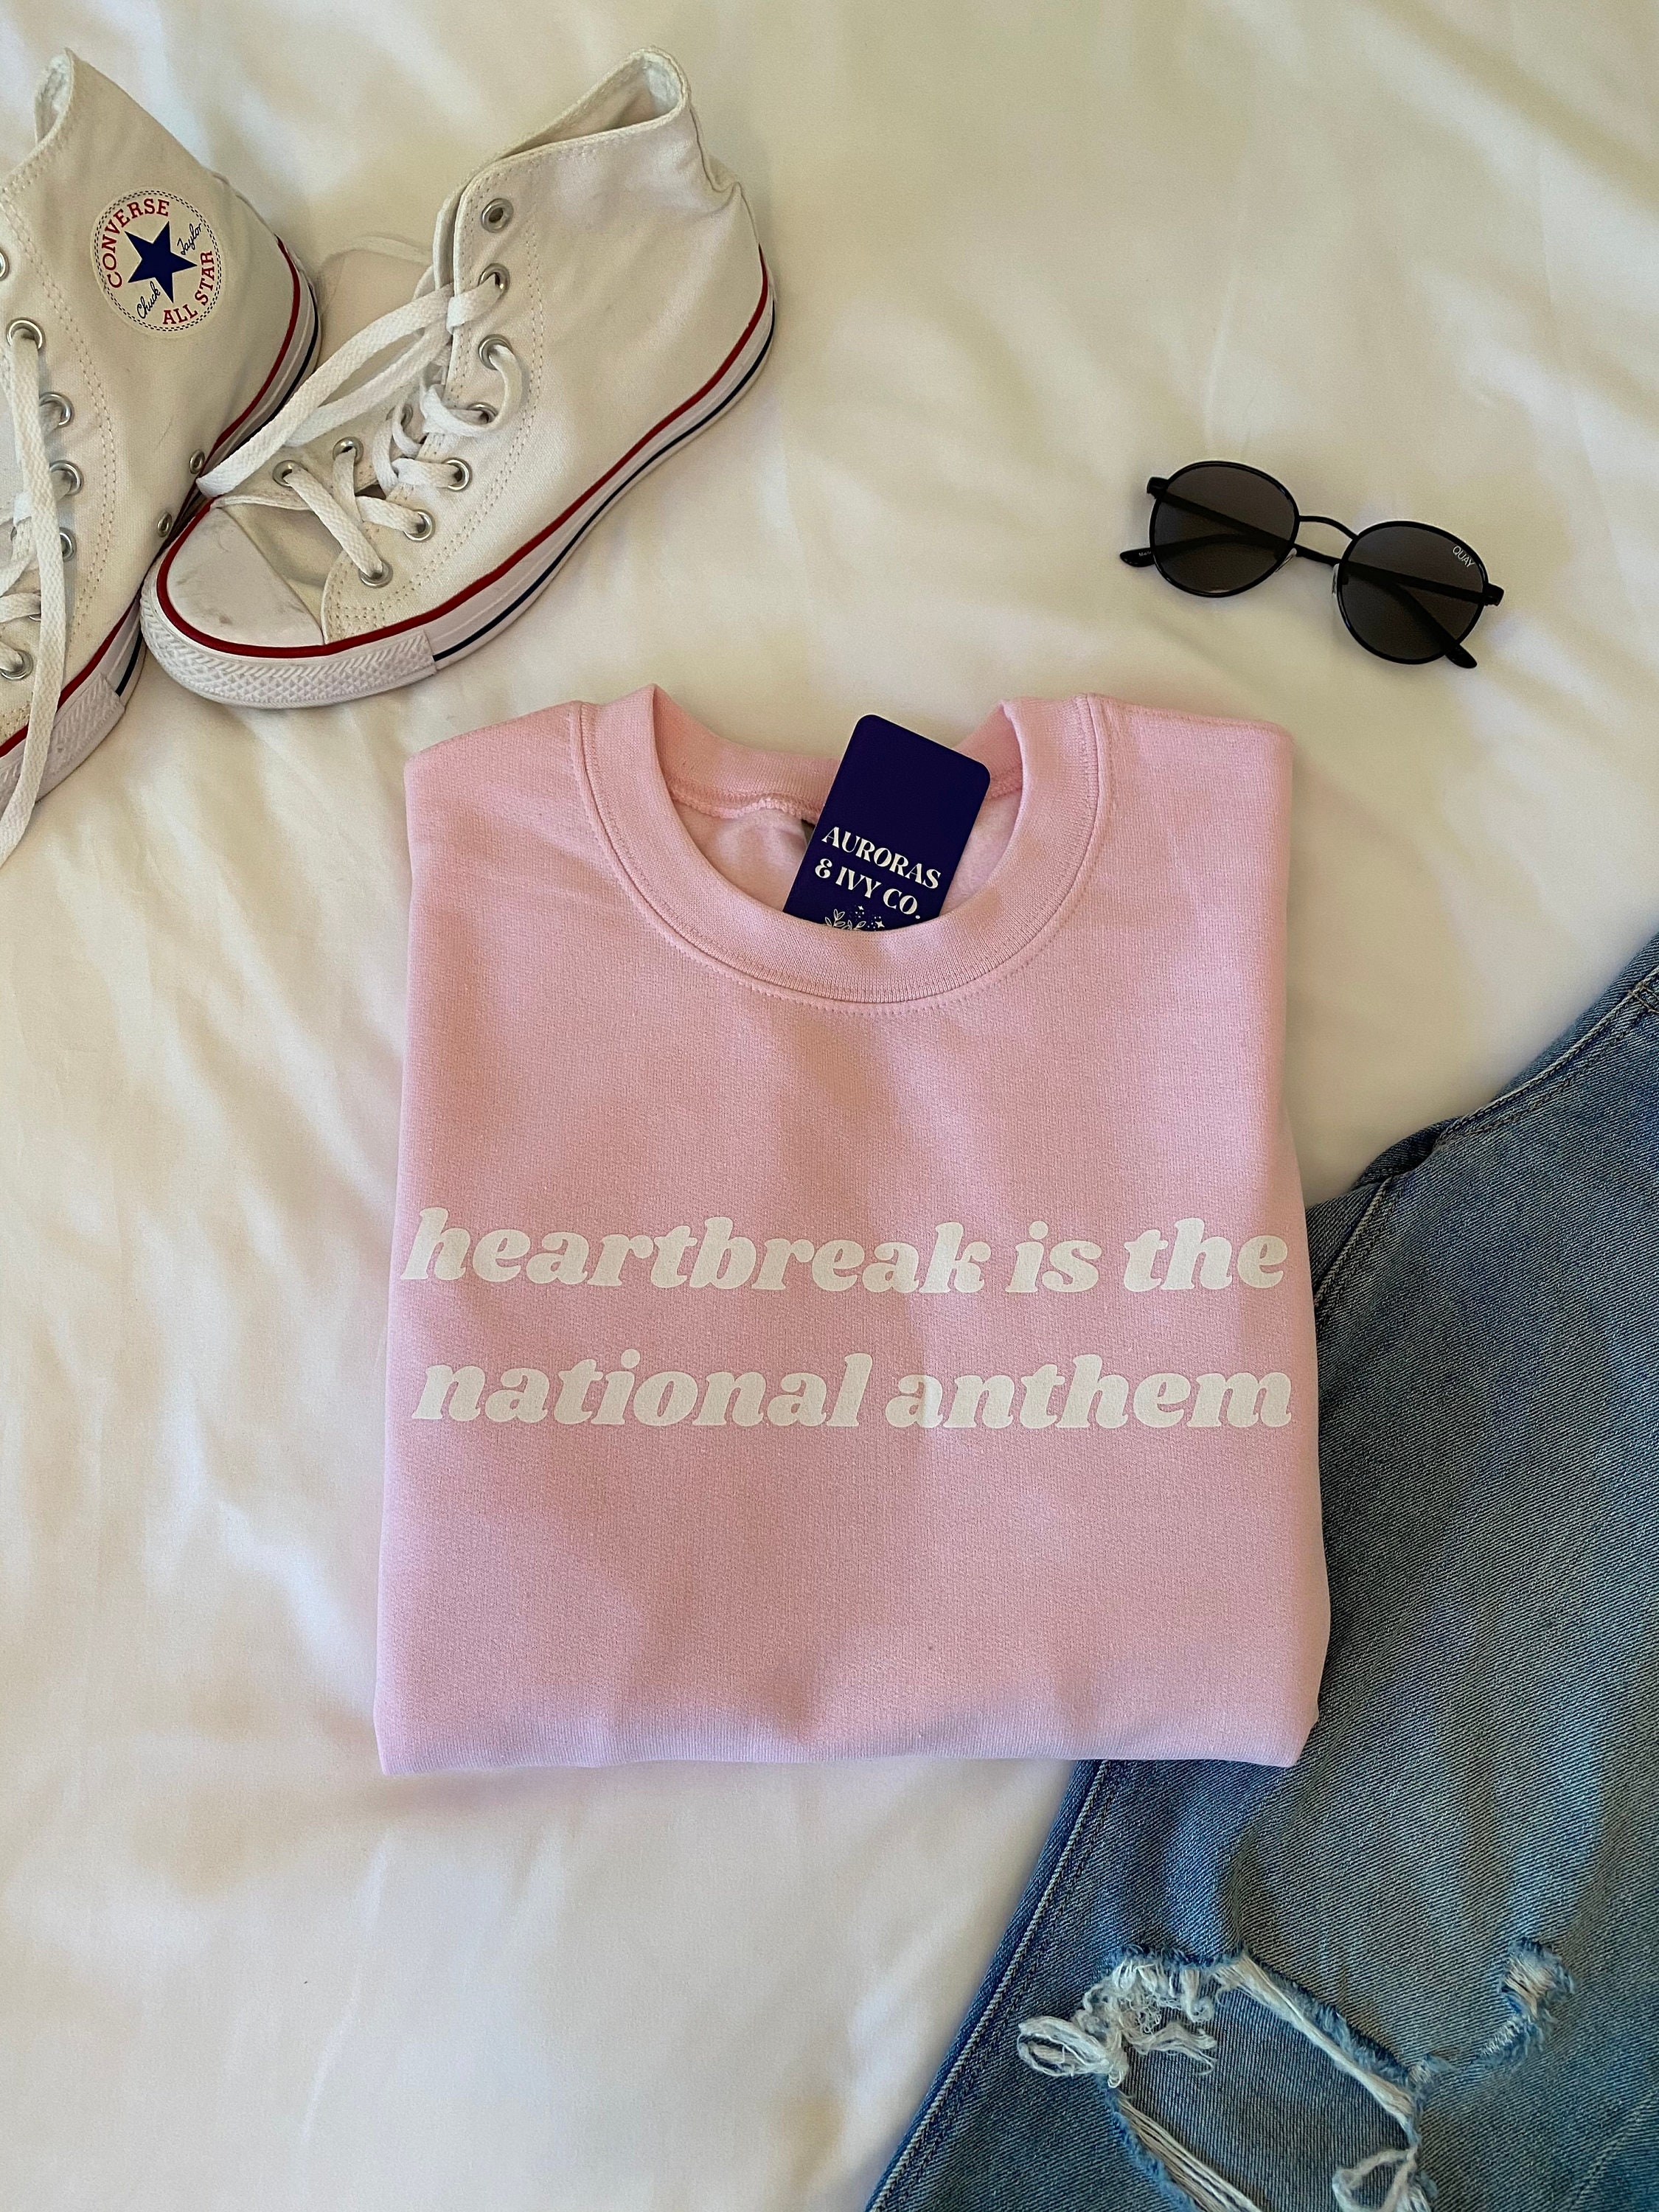 New Romantics Sweatshirt Taylor Swift 1989 Sweatshirt - Etsy